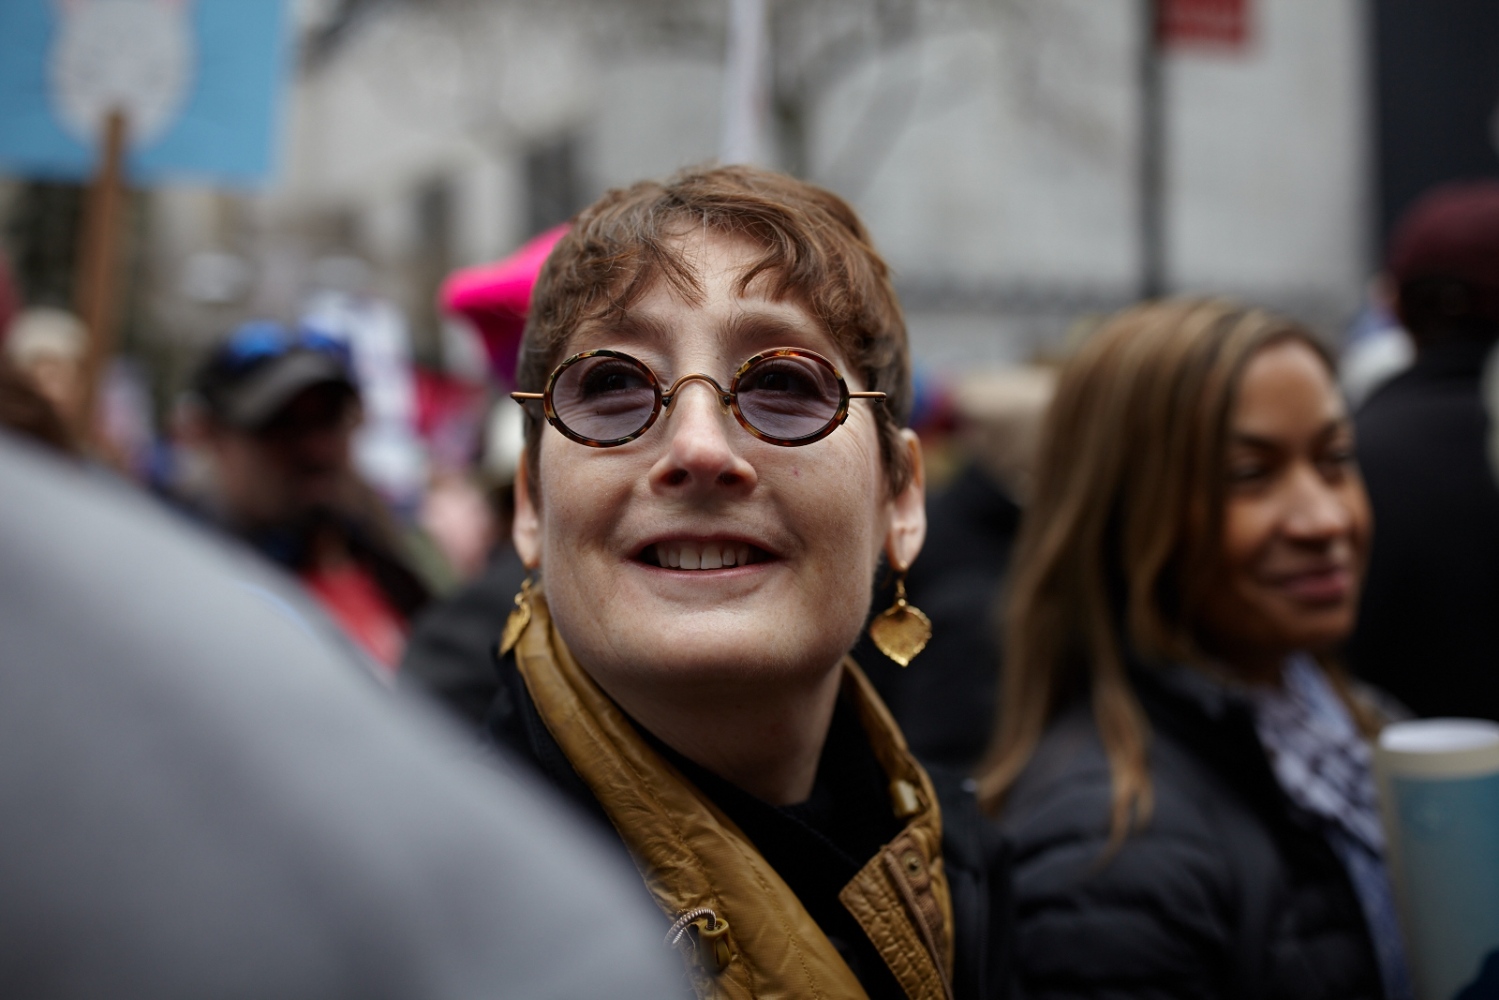 Women's March / New York City